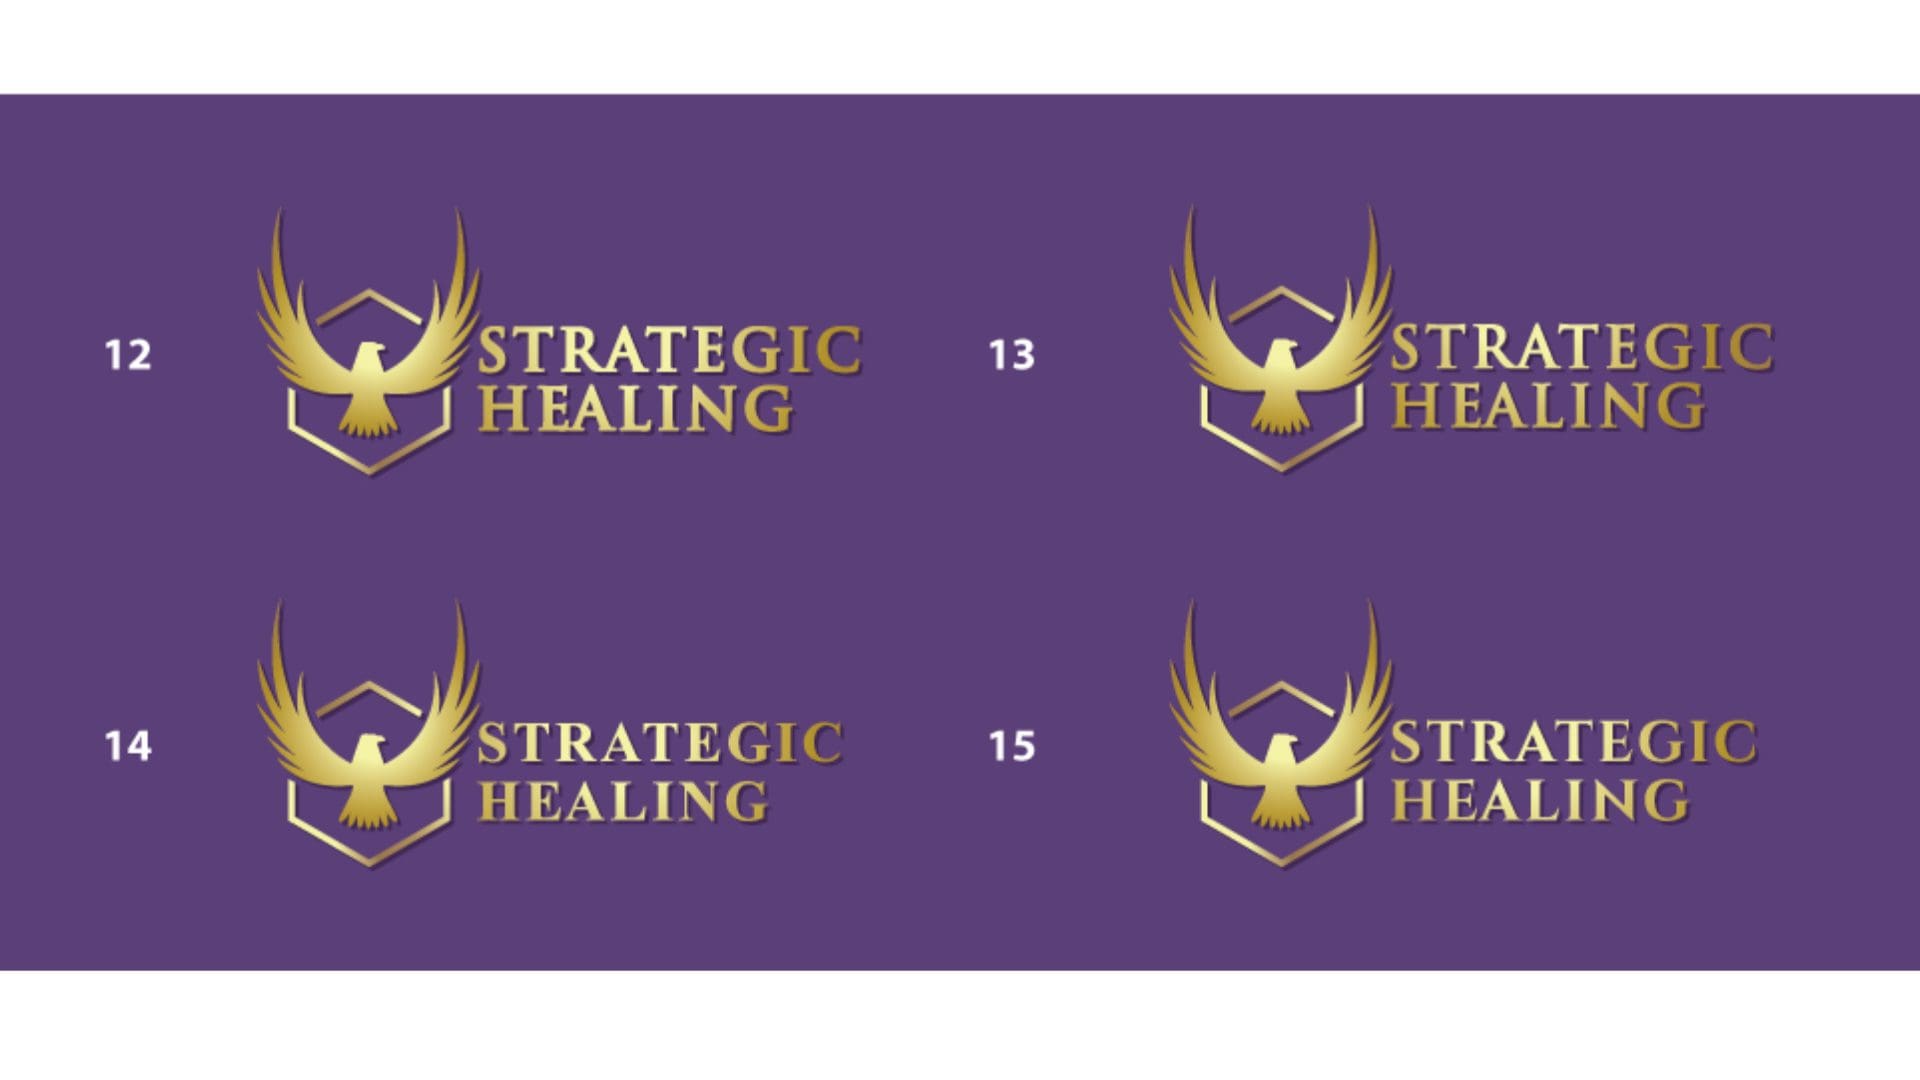 Strategic Healing - Eagle Concept 12-15